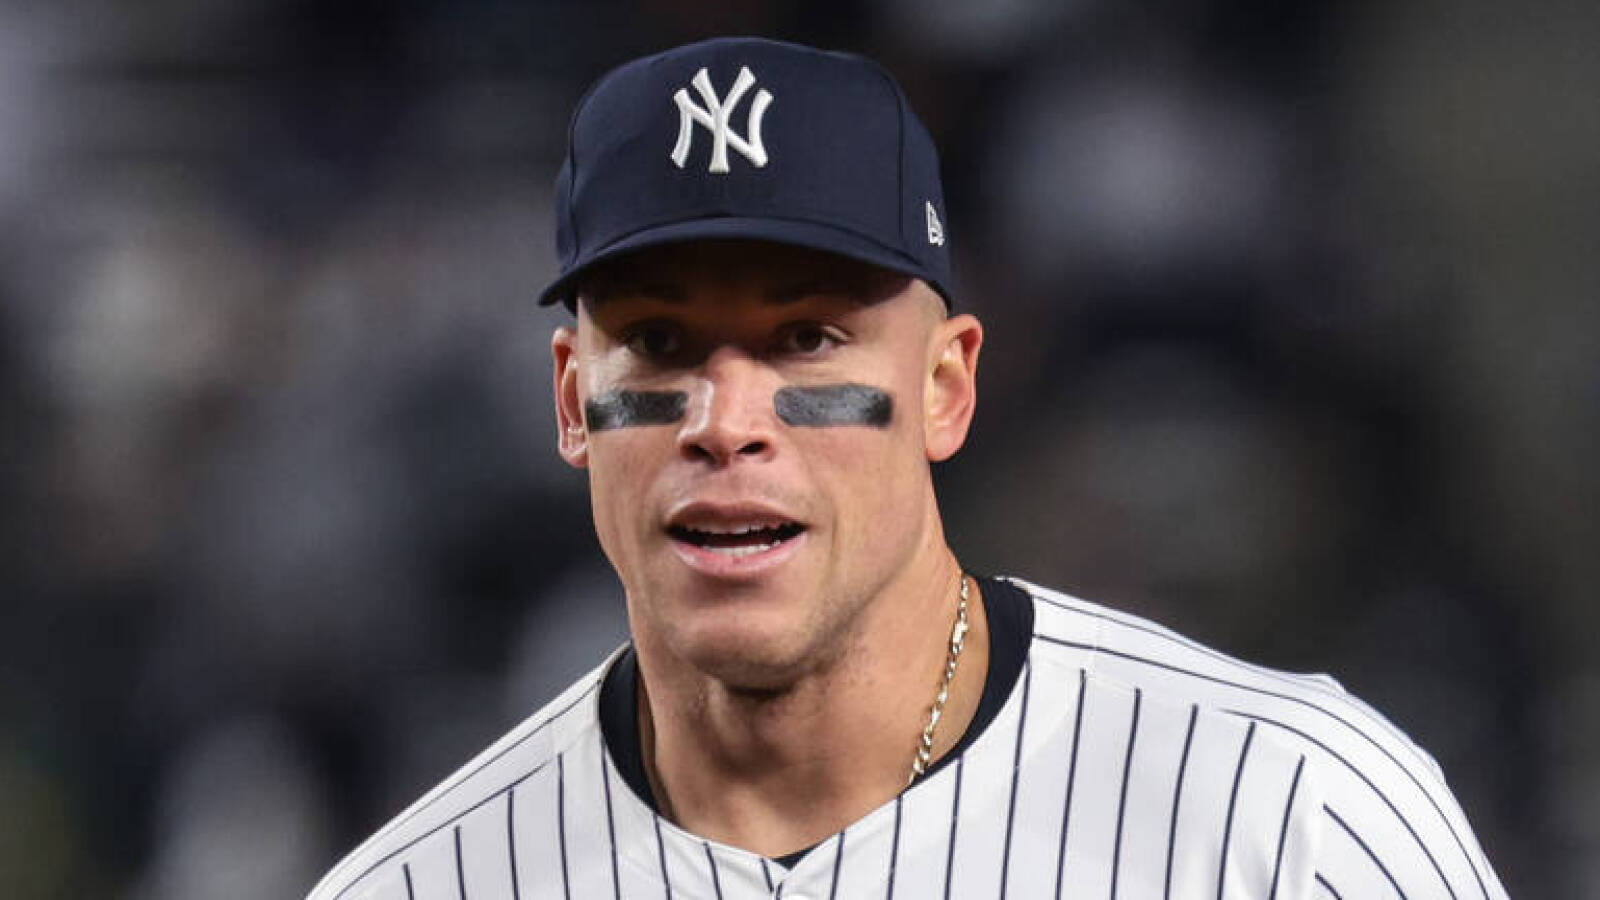 Watch: Aaron Judge passes Derek Jeter on Yankees all-time home run list